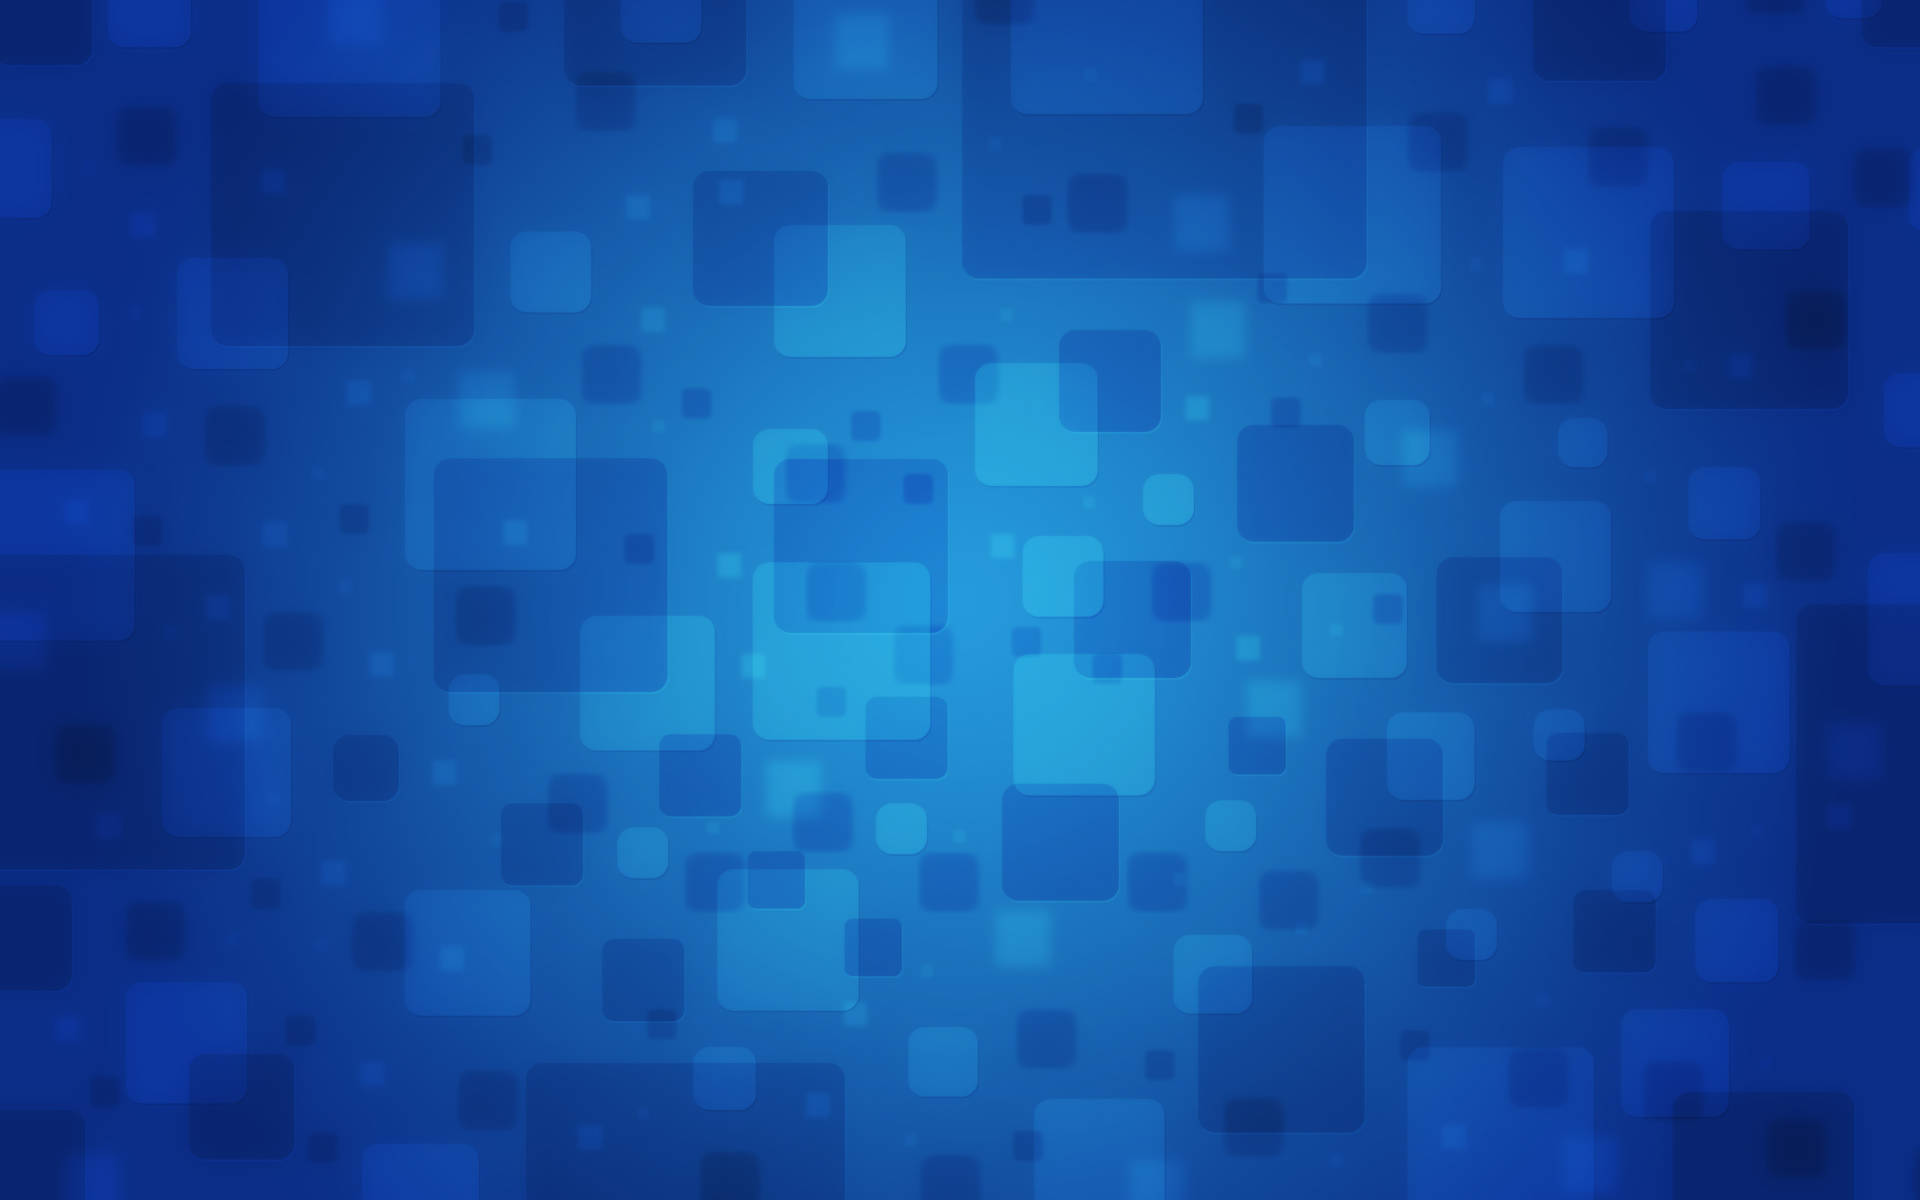 Dark Blue Square Patterns Background